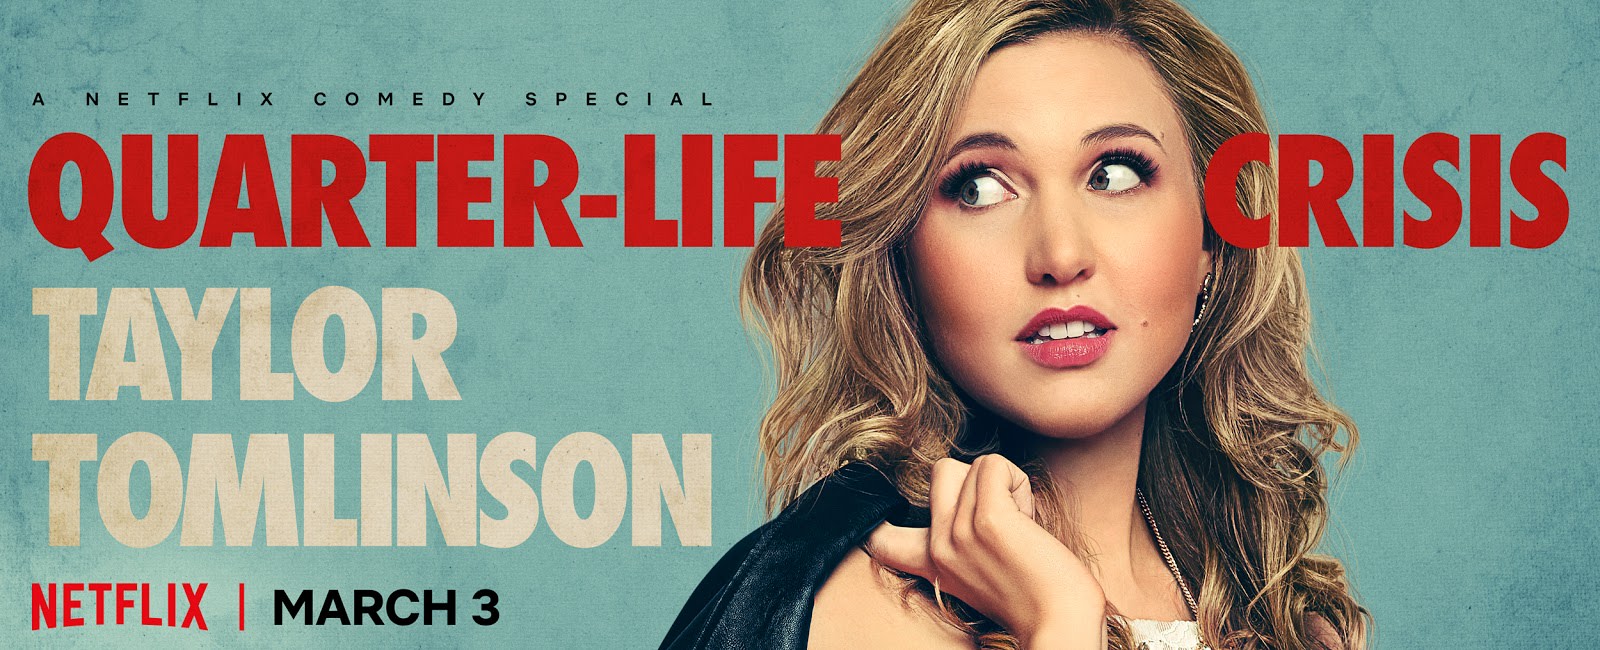 Netflix estreia trailer de Taylor Tomlinson: Quarter-Life Crisis